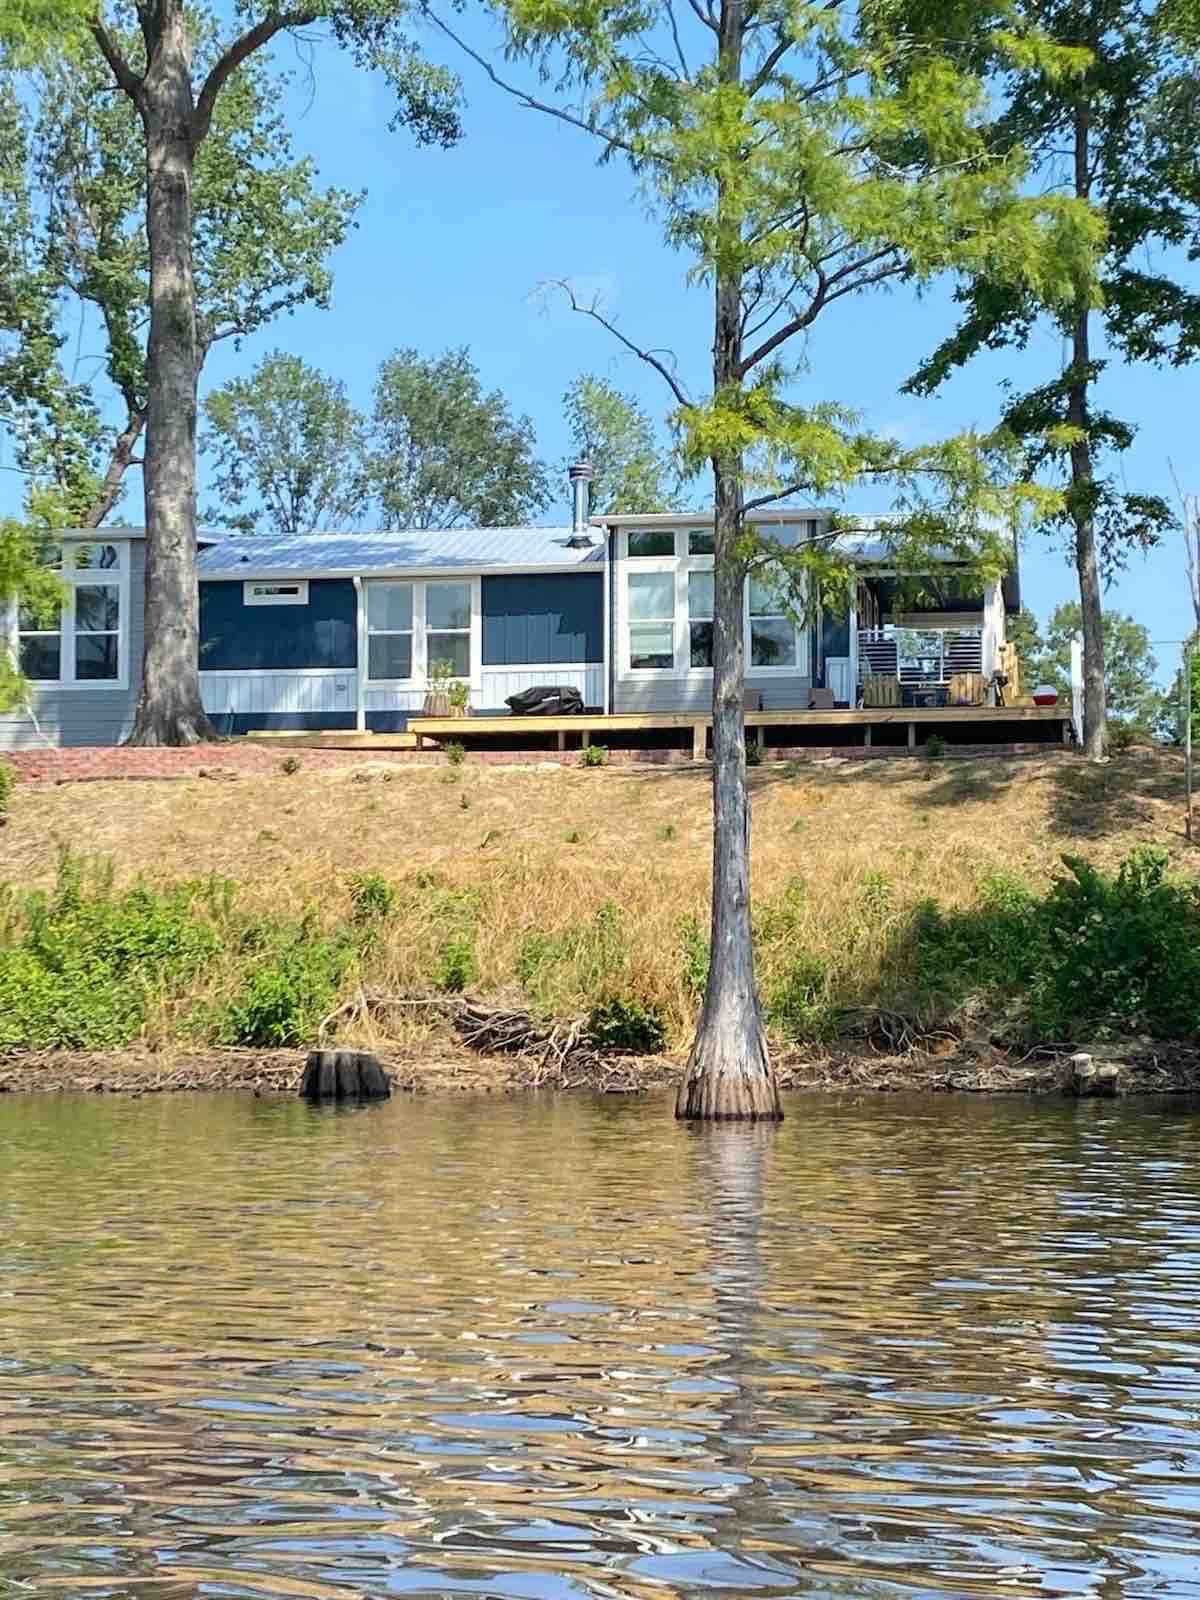 Modern, stylish lake front house. Sweeping views